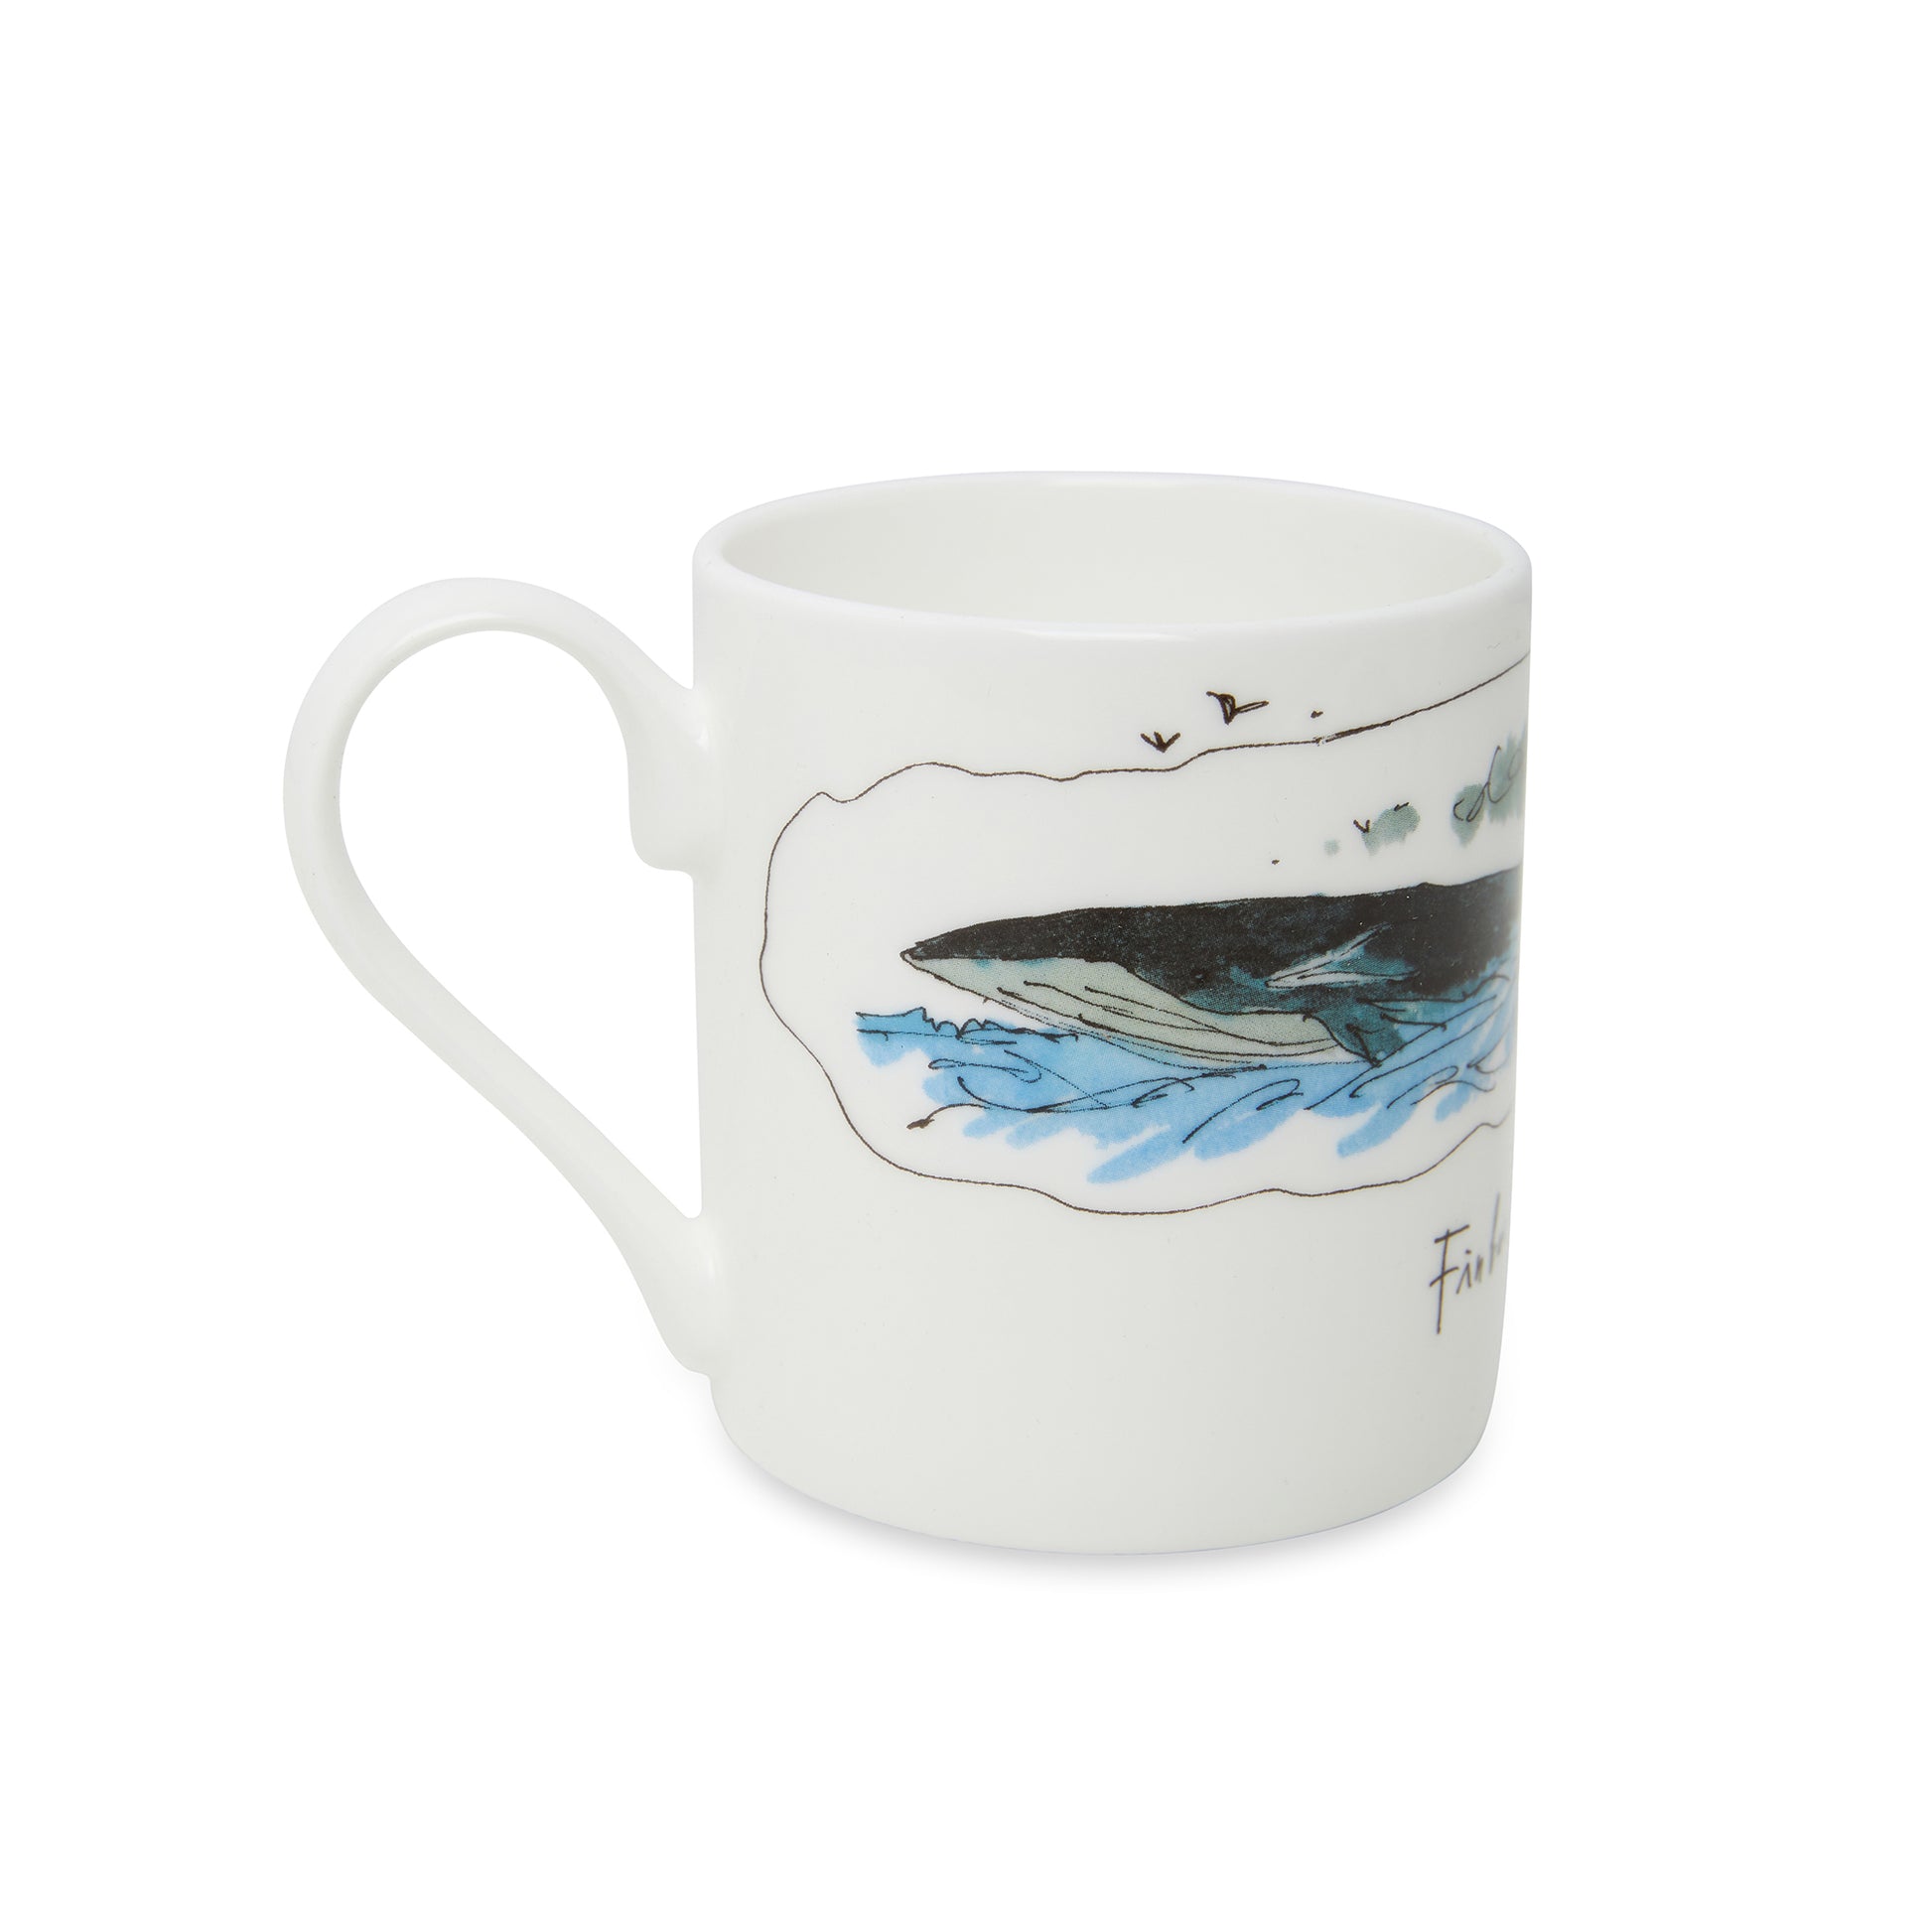 Mug featuring Quentin Blake Blue whale illustration